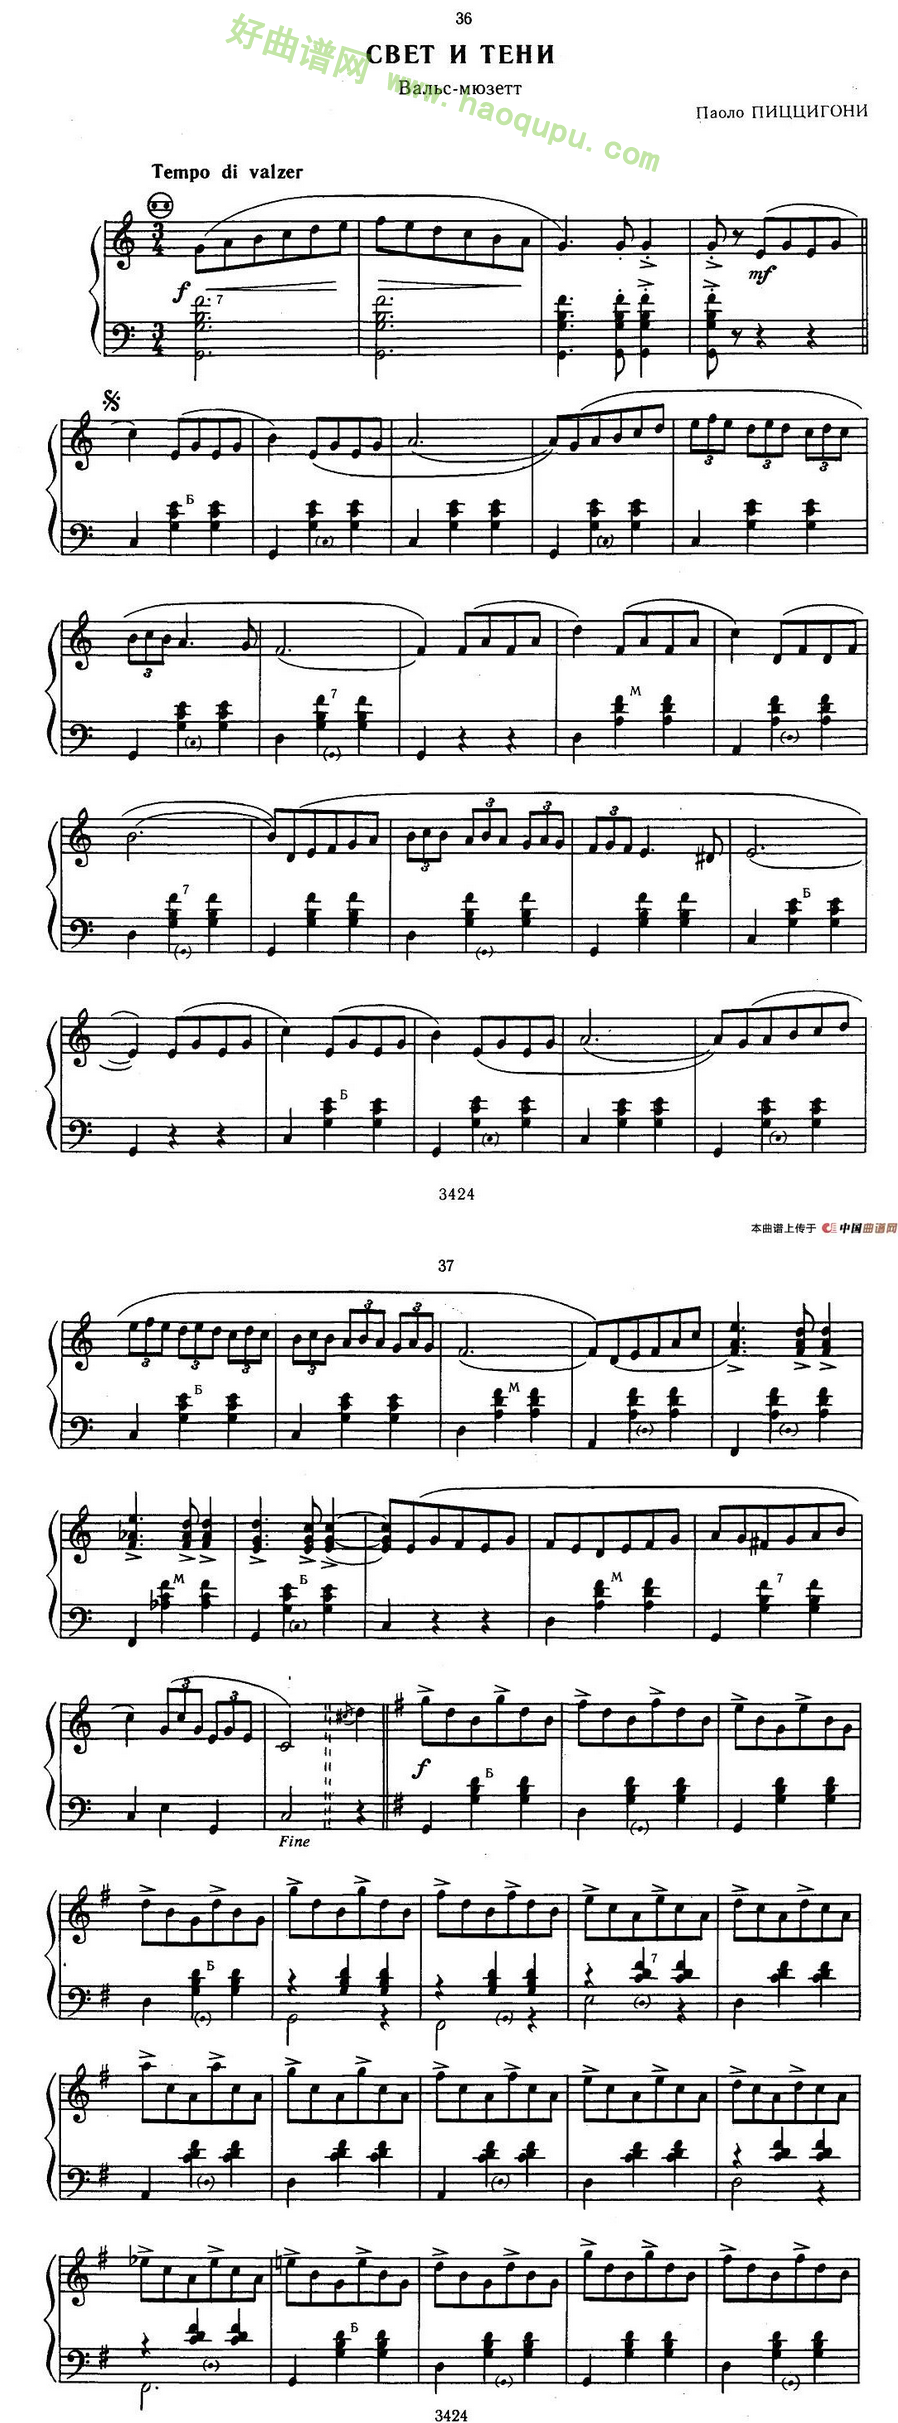 《CBET N TENN》（光与影）手风琴曲谱第2张